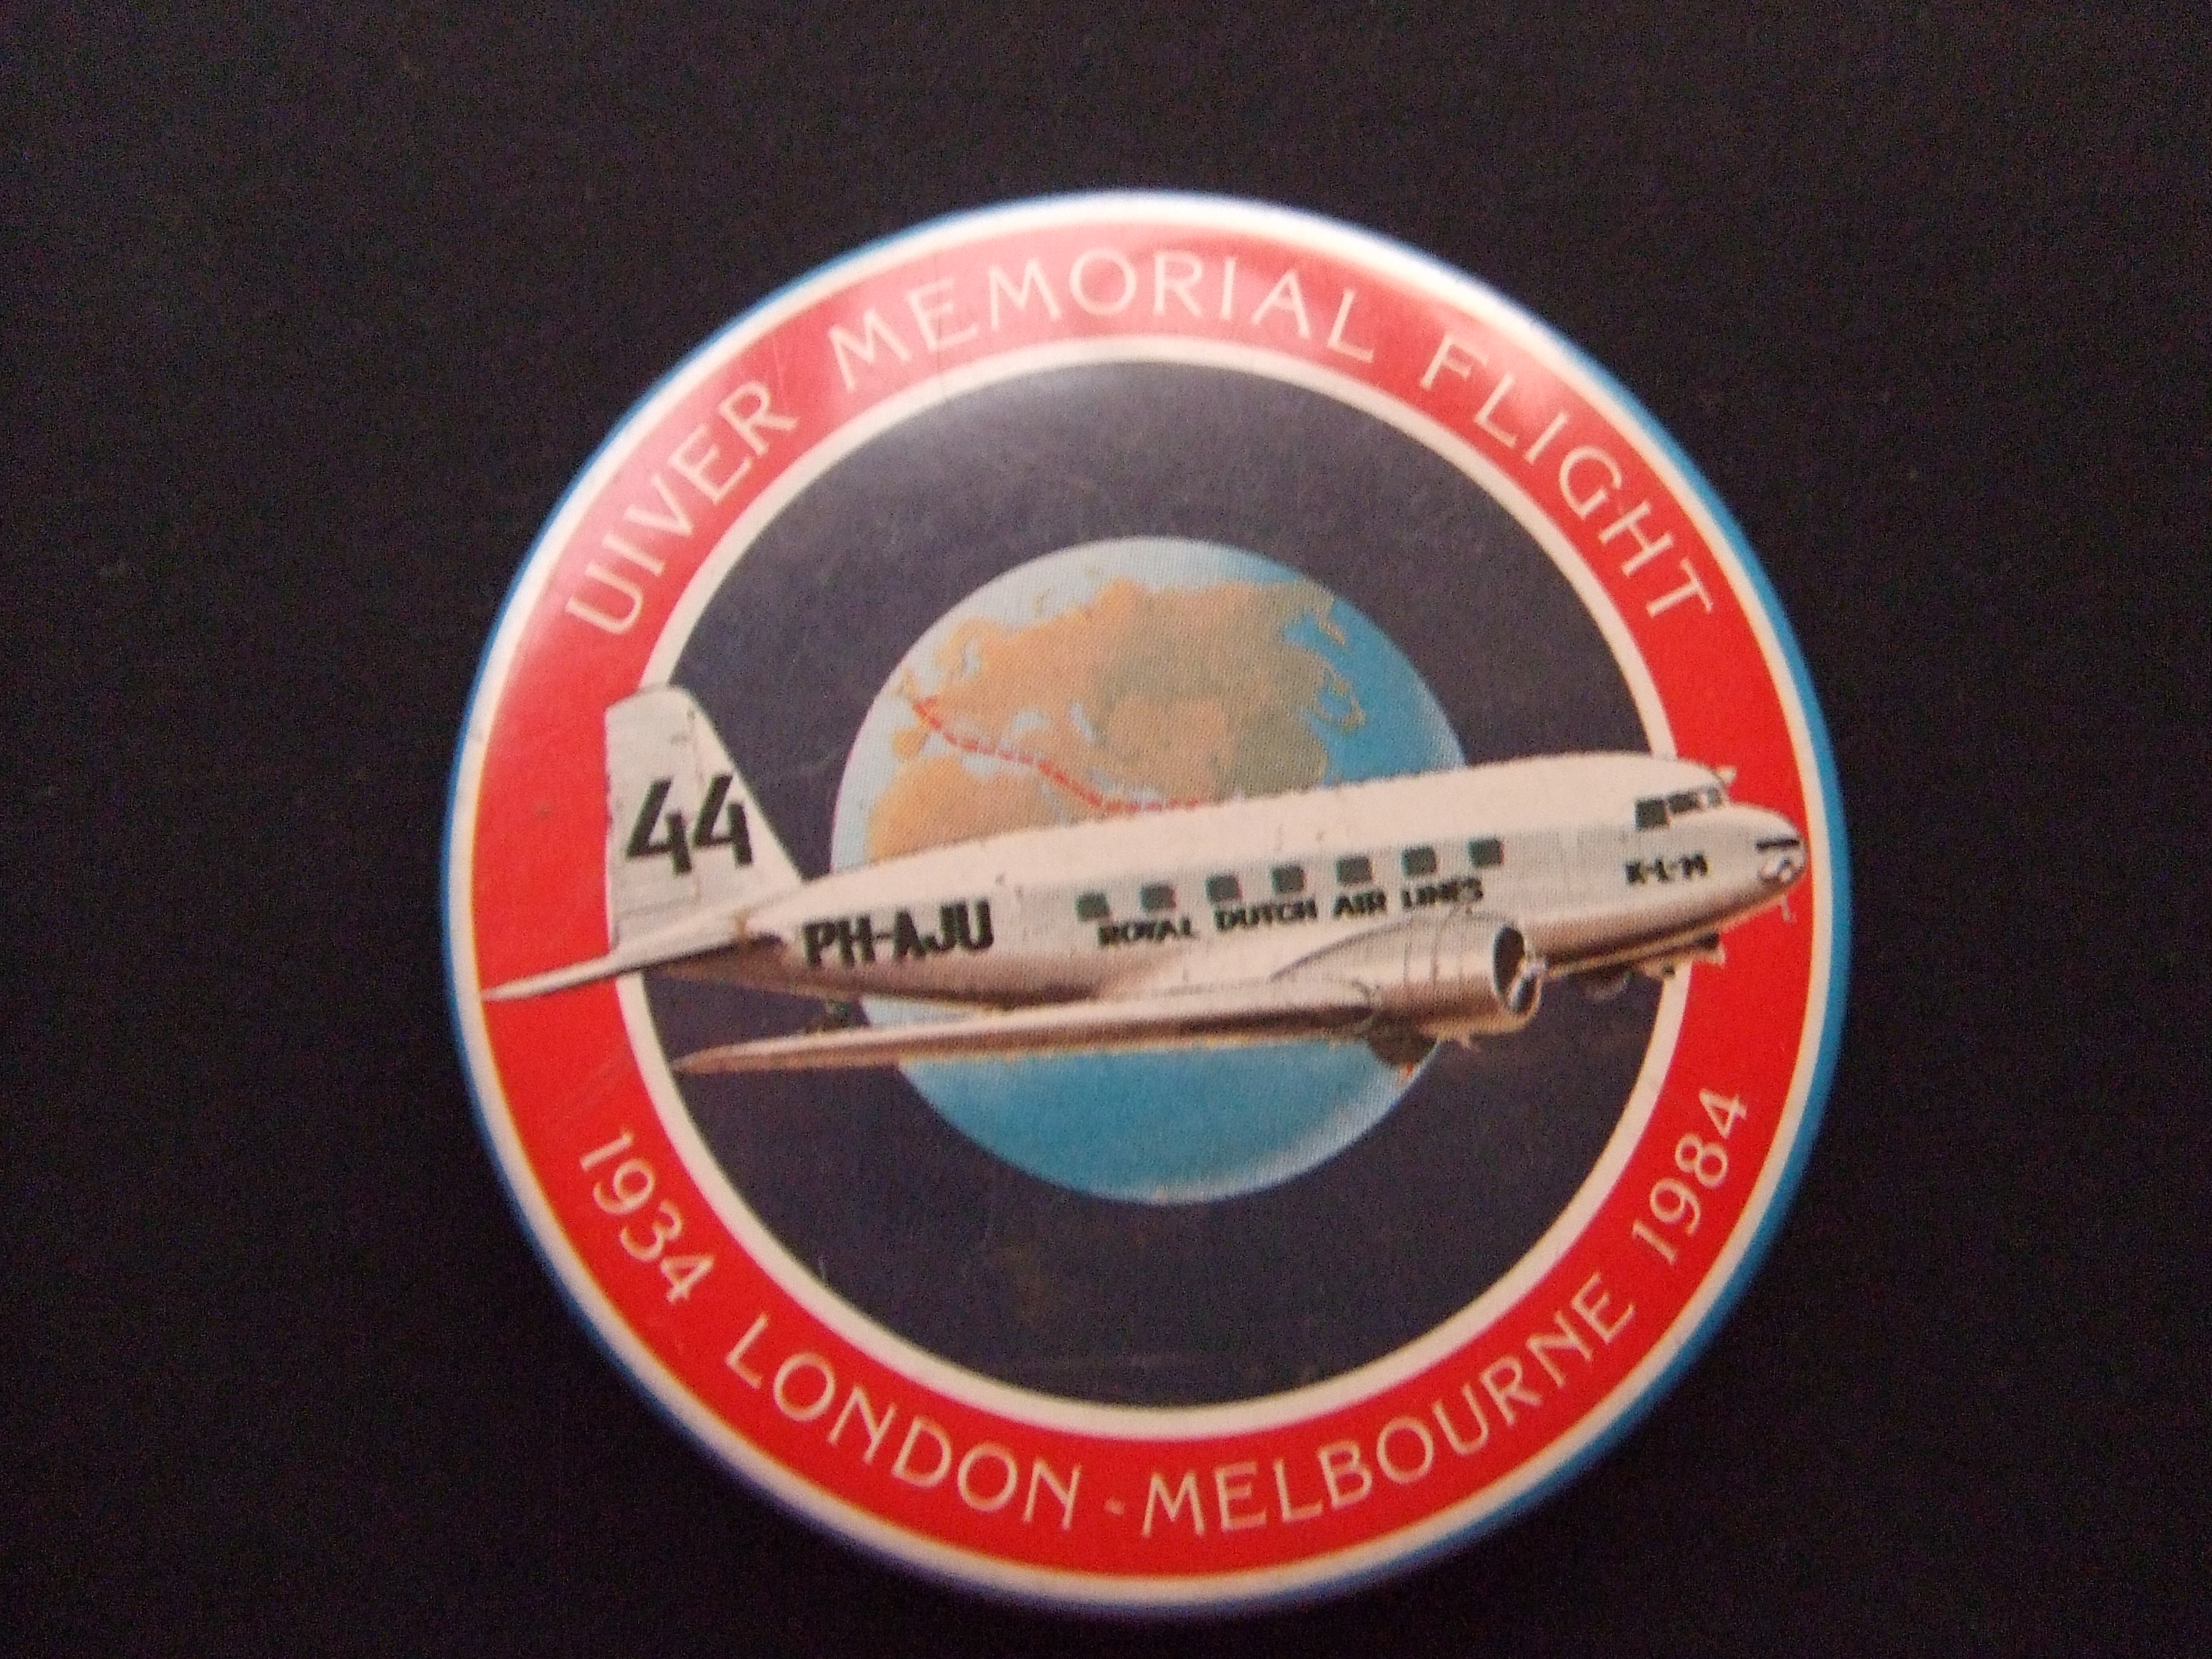 Uiver Memorial Flight London-Melbourne PH-A-JU